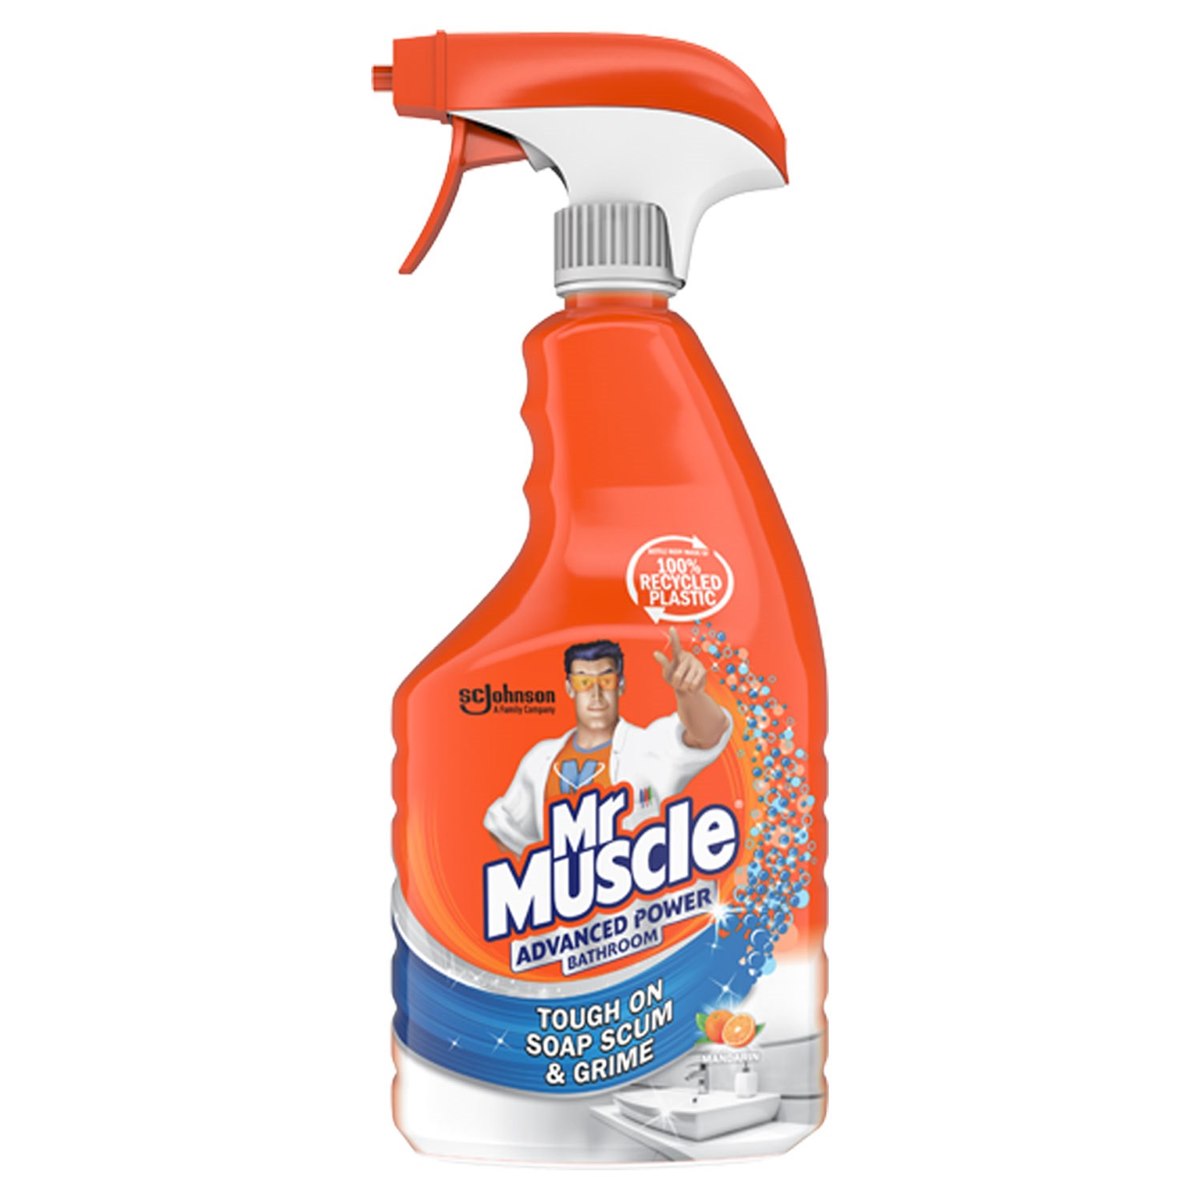 Mr Muscle Advanced Power Bathroom Cleaner Spray